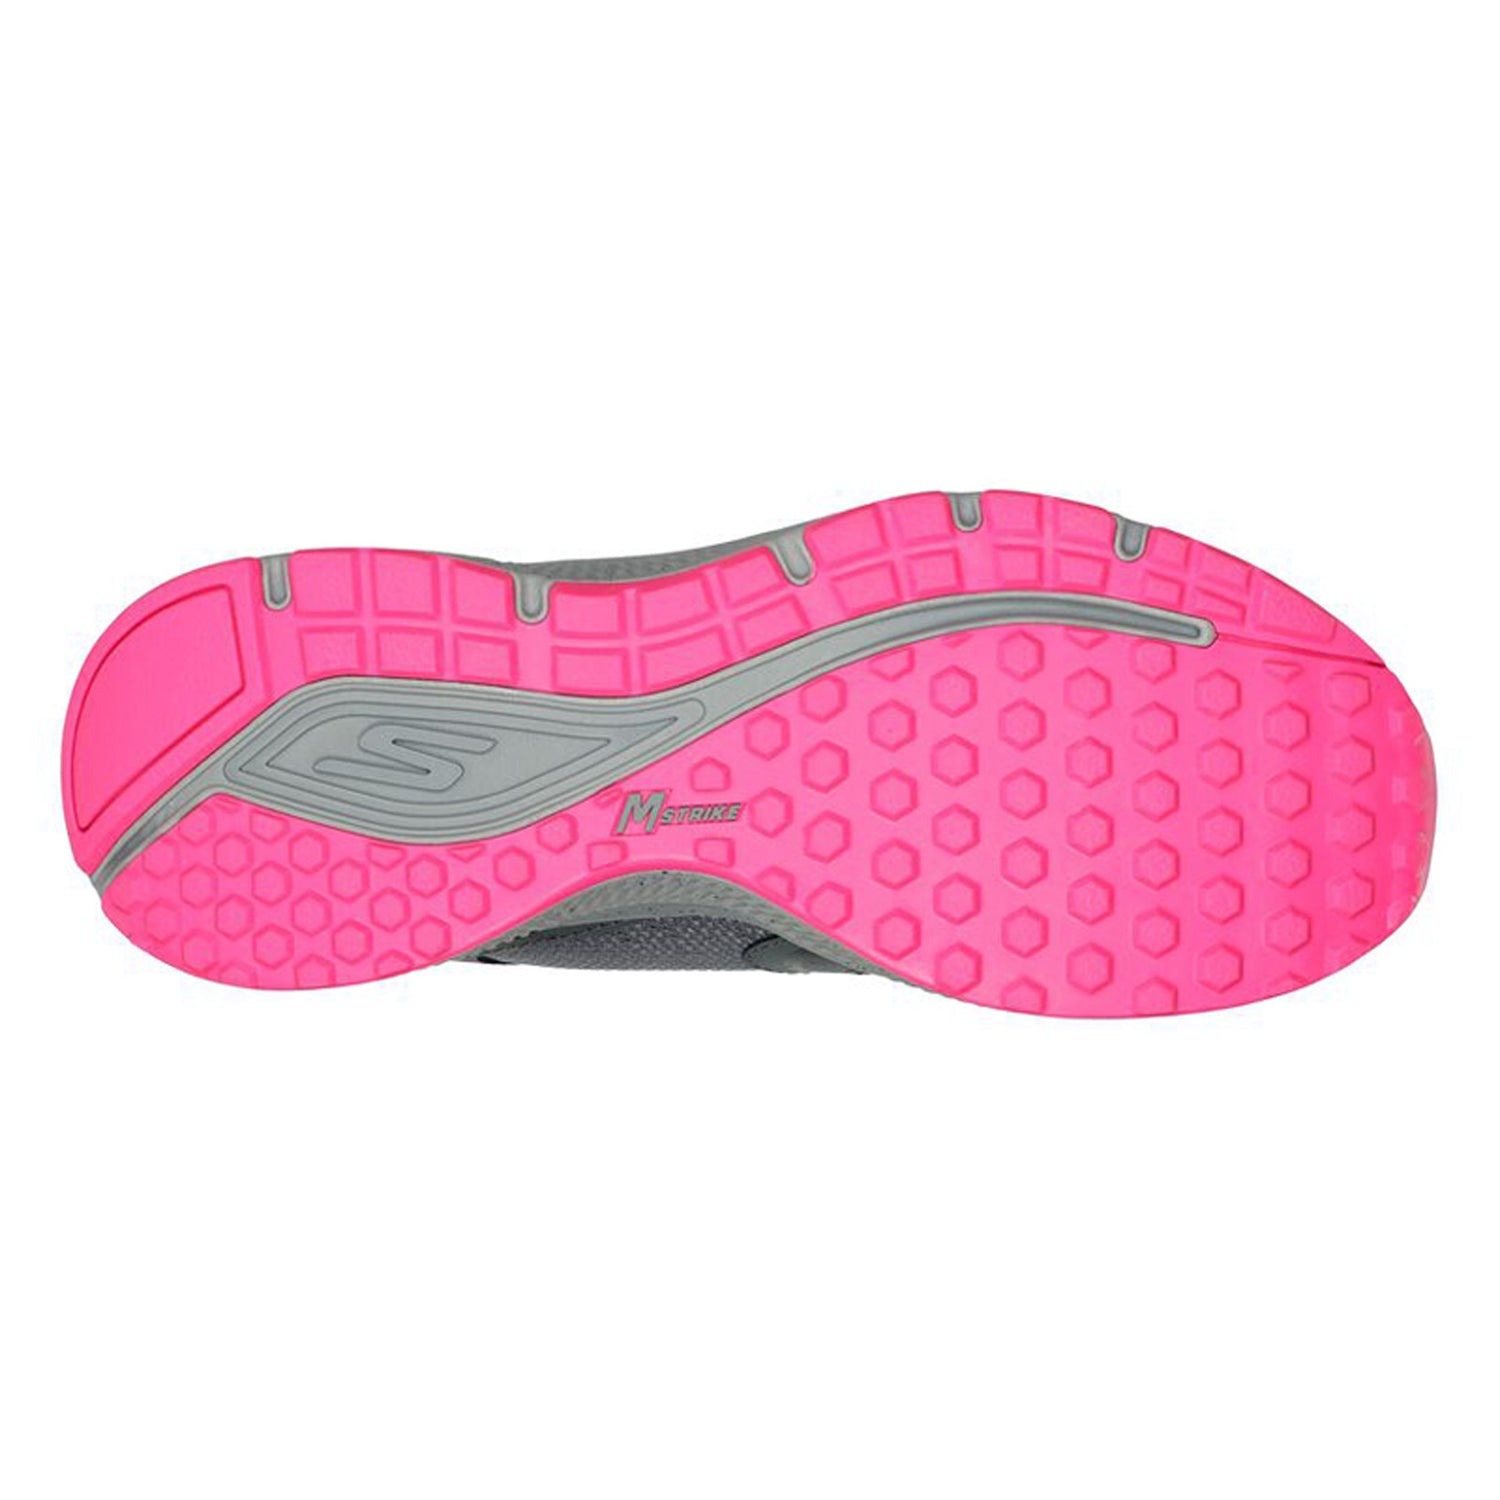 Peltz Shoes  Women's Skechers GO RUN Consistent - Vivid Horizon Running Shoe - Wide Width GREY PINK 128285W-GYPK